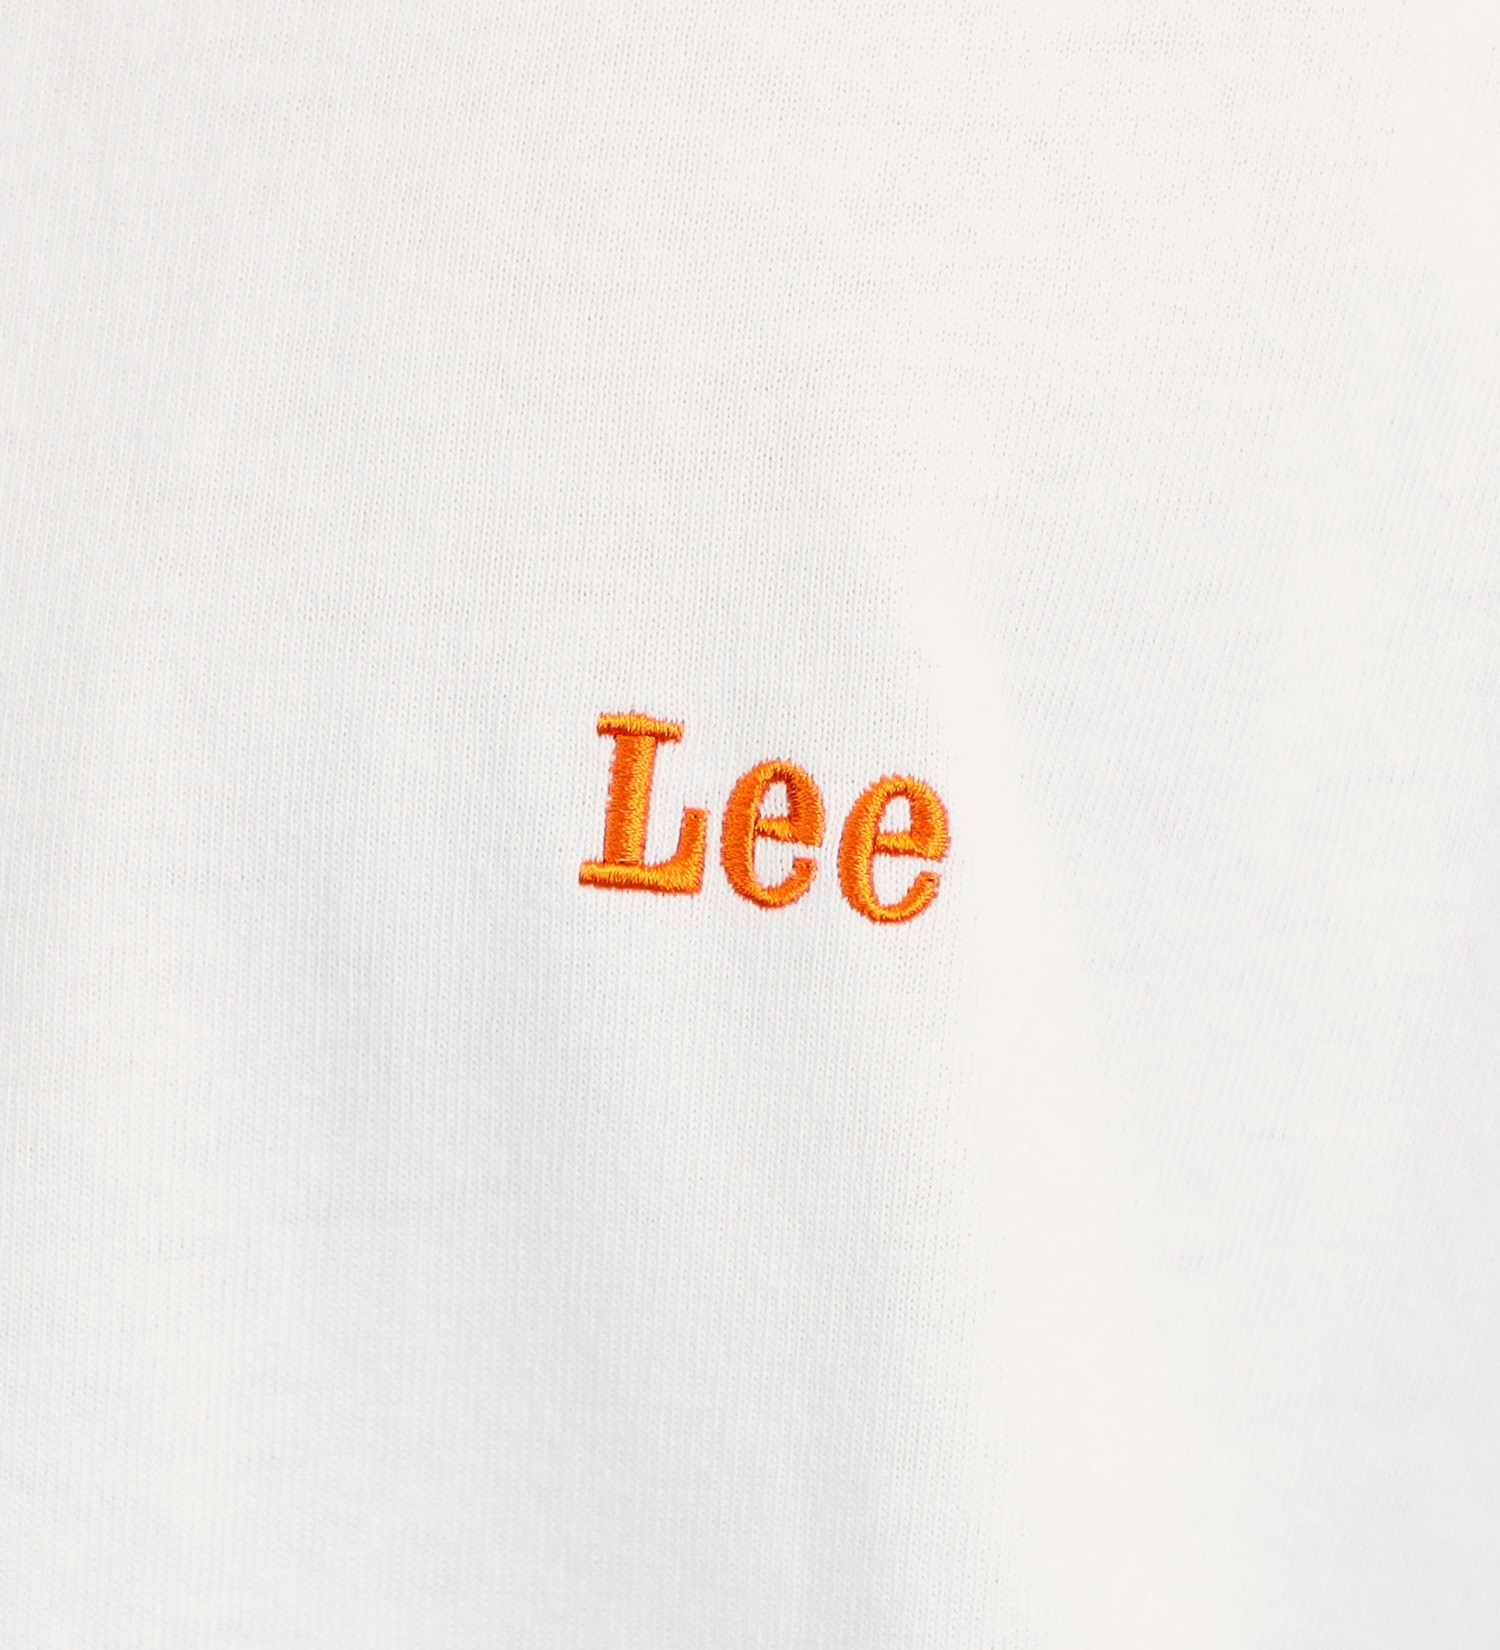 Lee(リー)の【GW SALE】バックプリント オールドアド ネオン ショートスリーブTee|トップス/Tシャツ/カットソー/メンズ|ホワイト